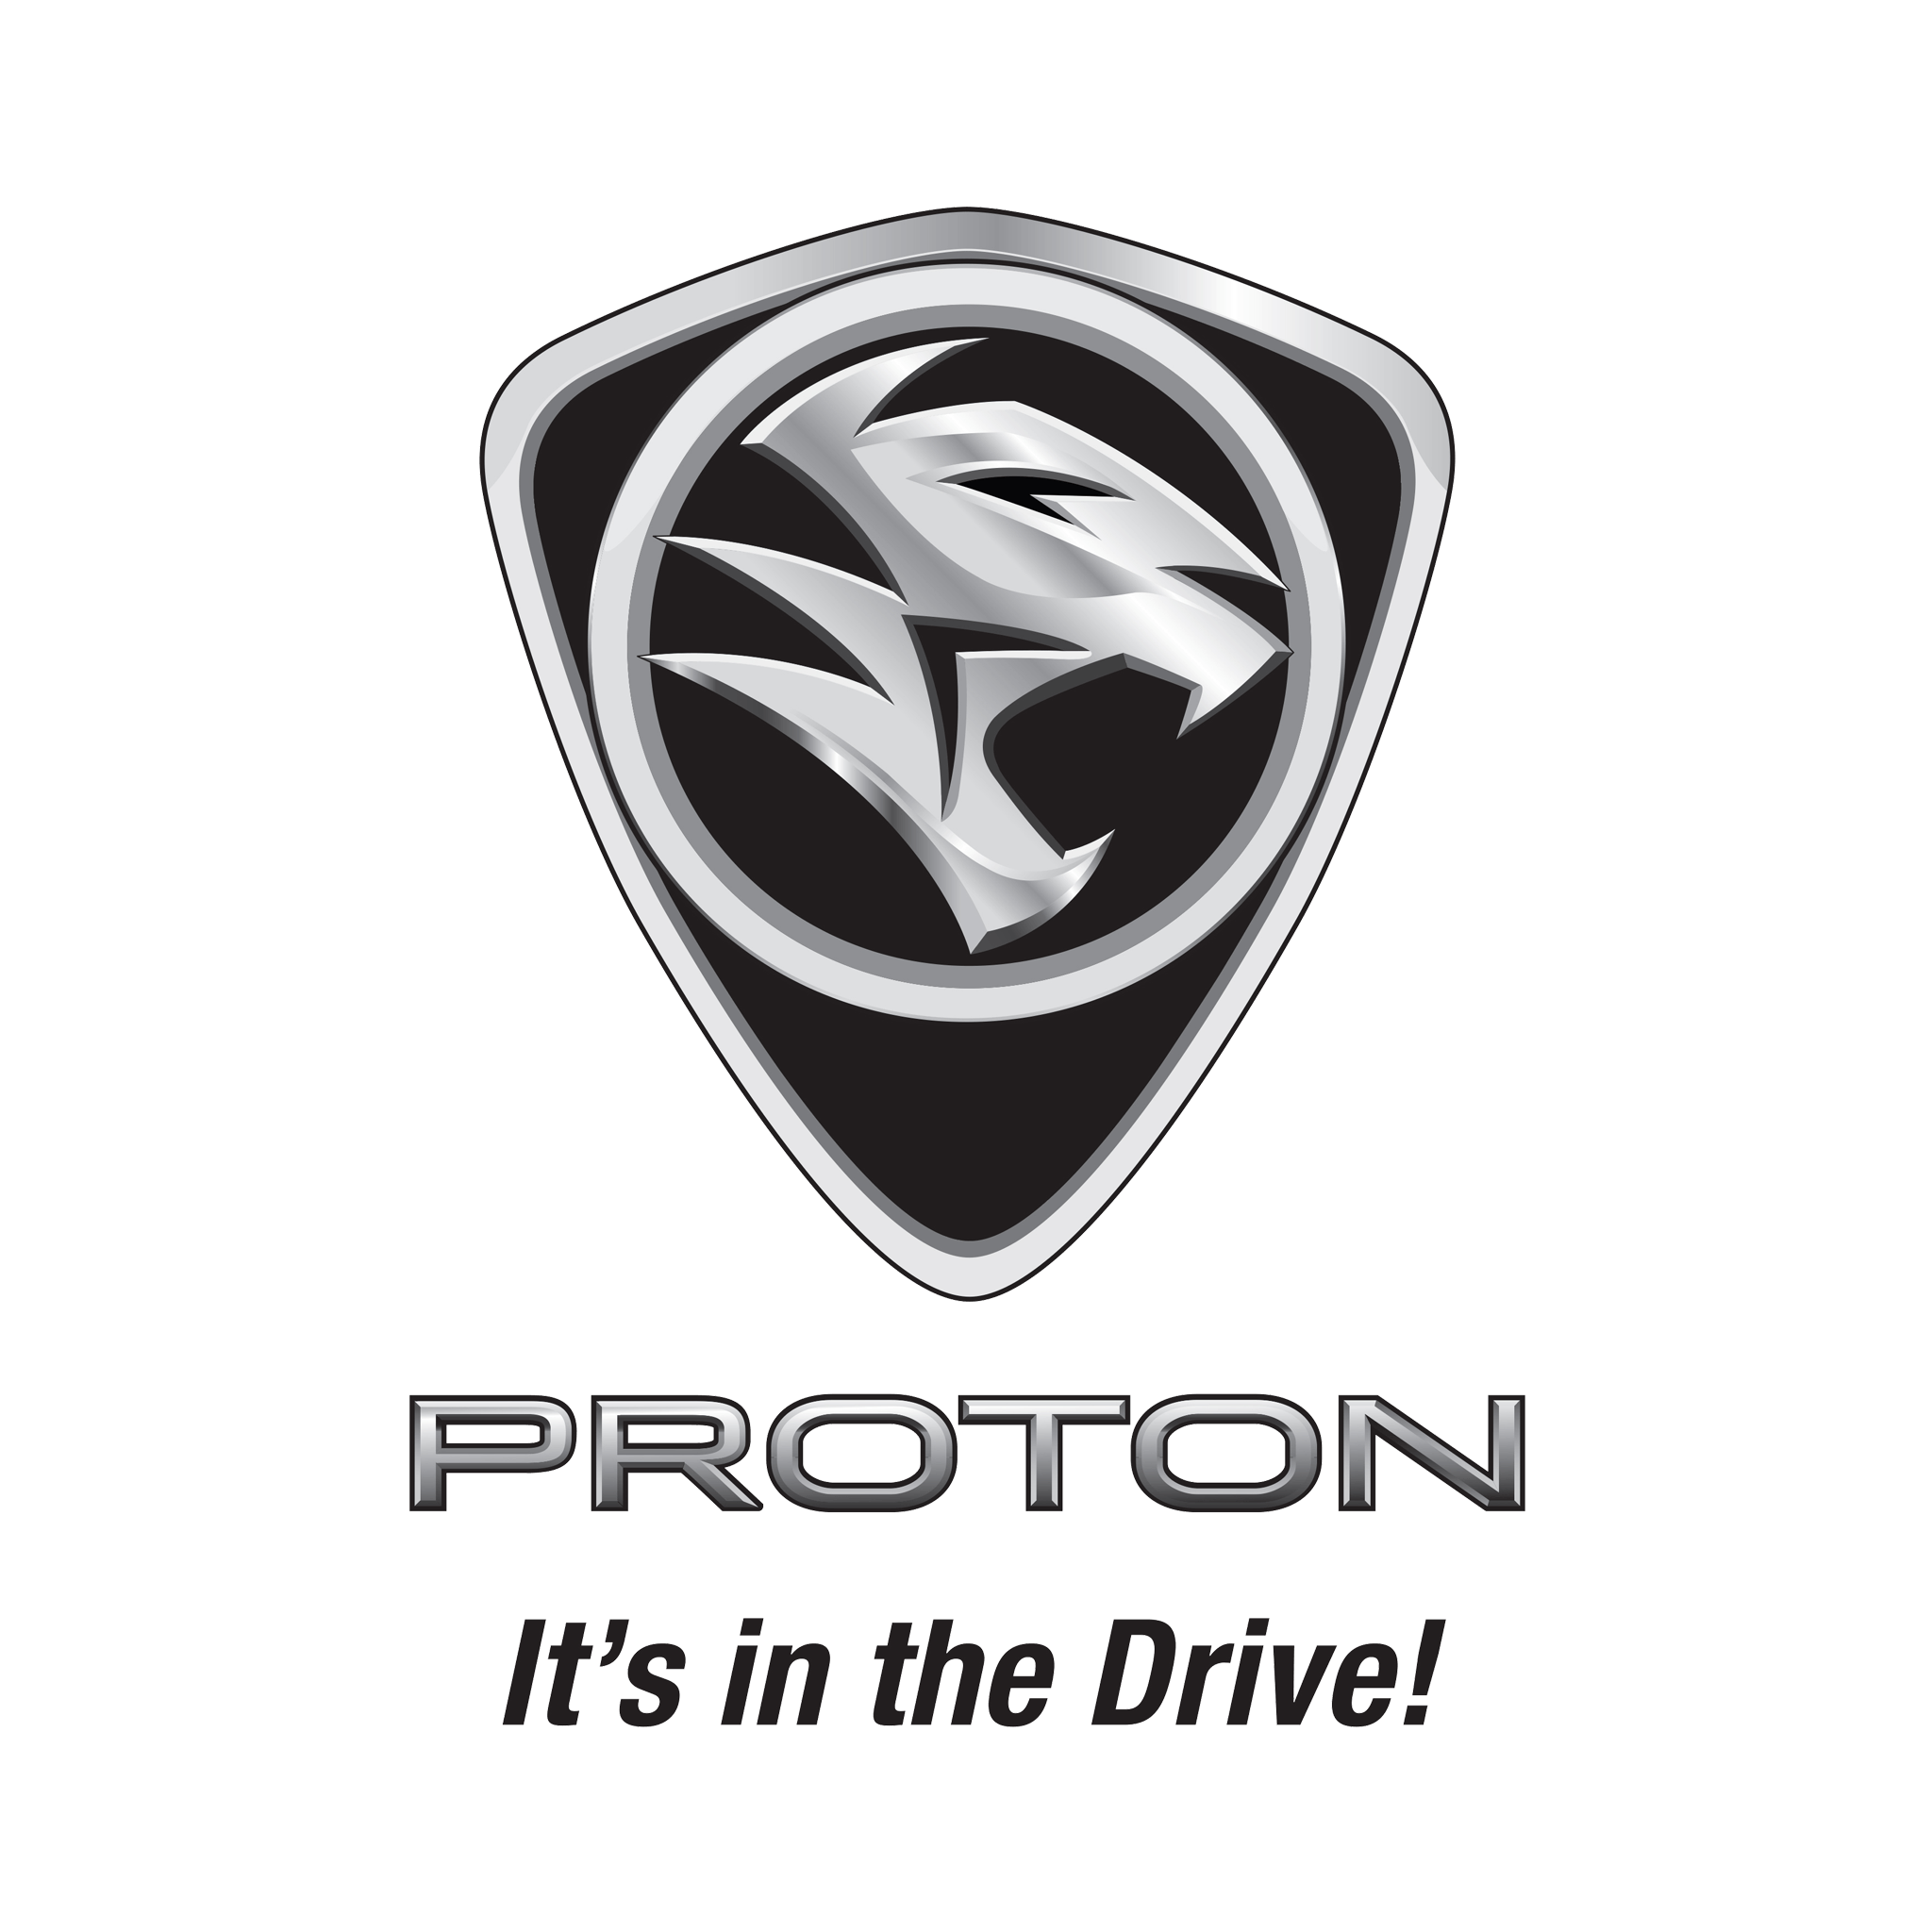 Automotive Engine Logo - Pin by Johnny Elf on Automobile Logos | Pinterest | Logos, Car logos ...